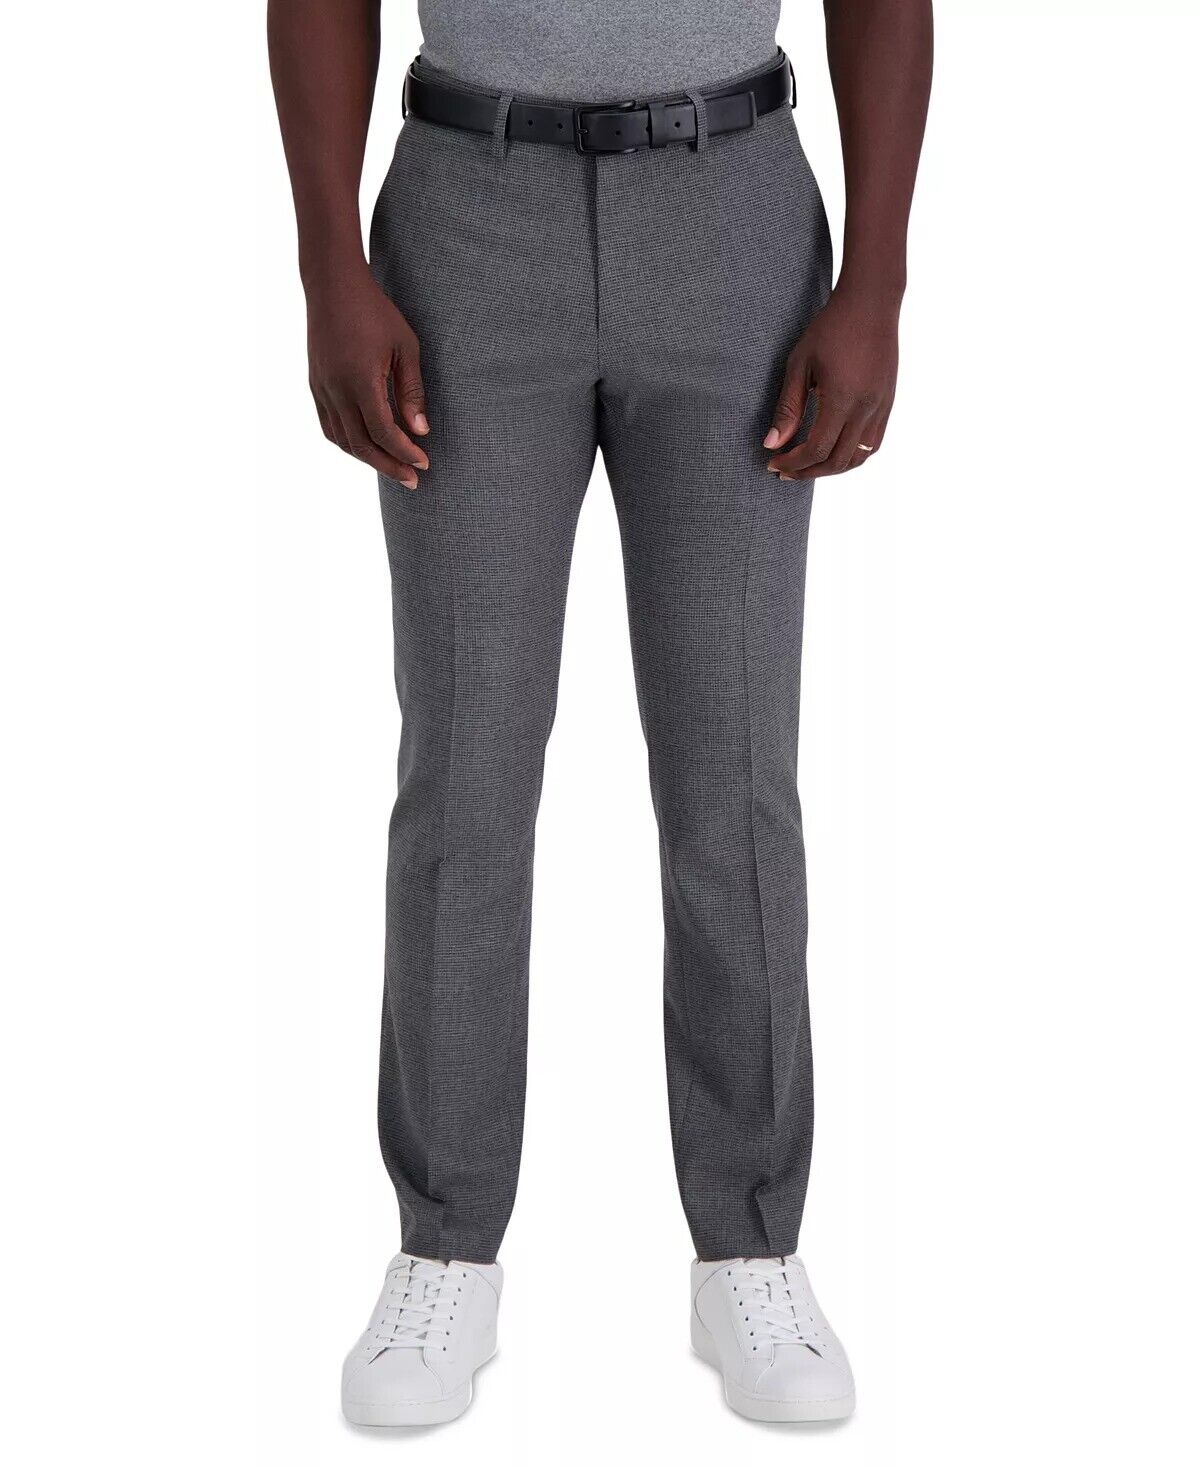 KENNETH COLE Men's Slim-Fit Stretch Dress Pants 38 x 30 Grey Windowpane